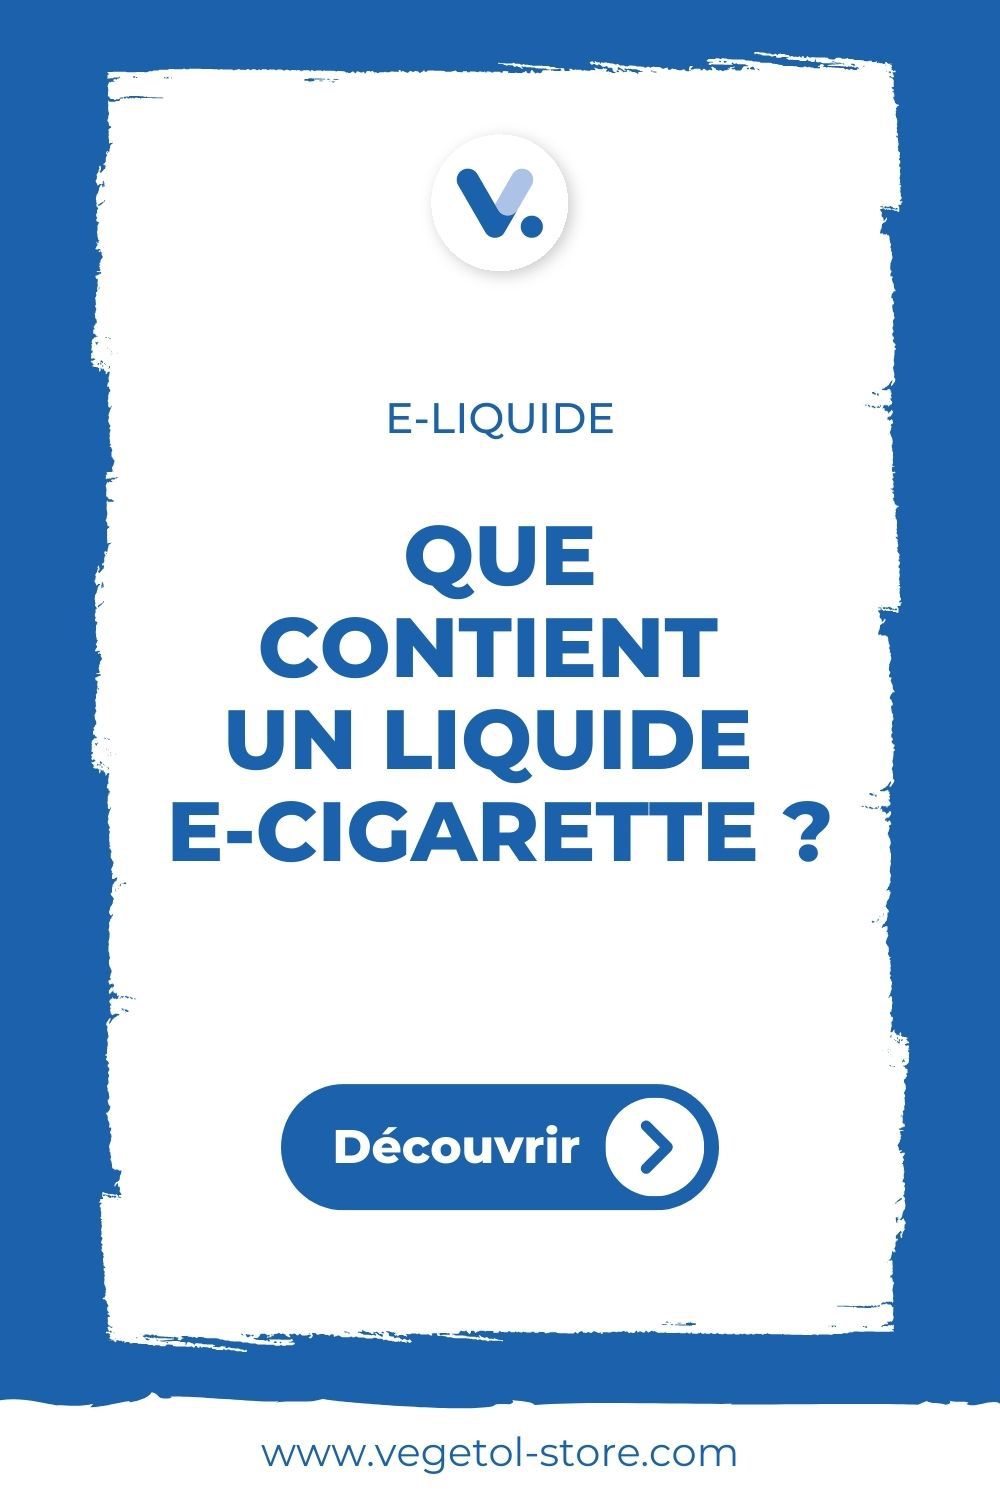 ingredients-e-liquide-France